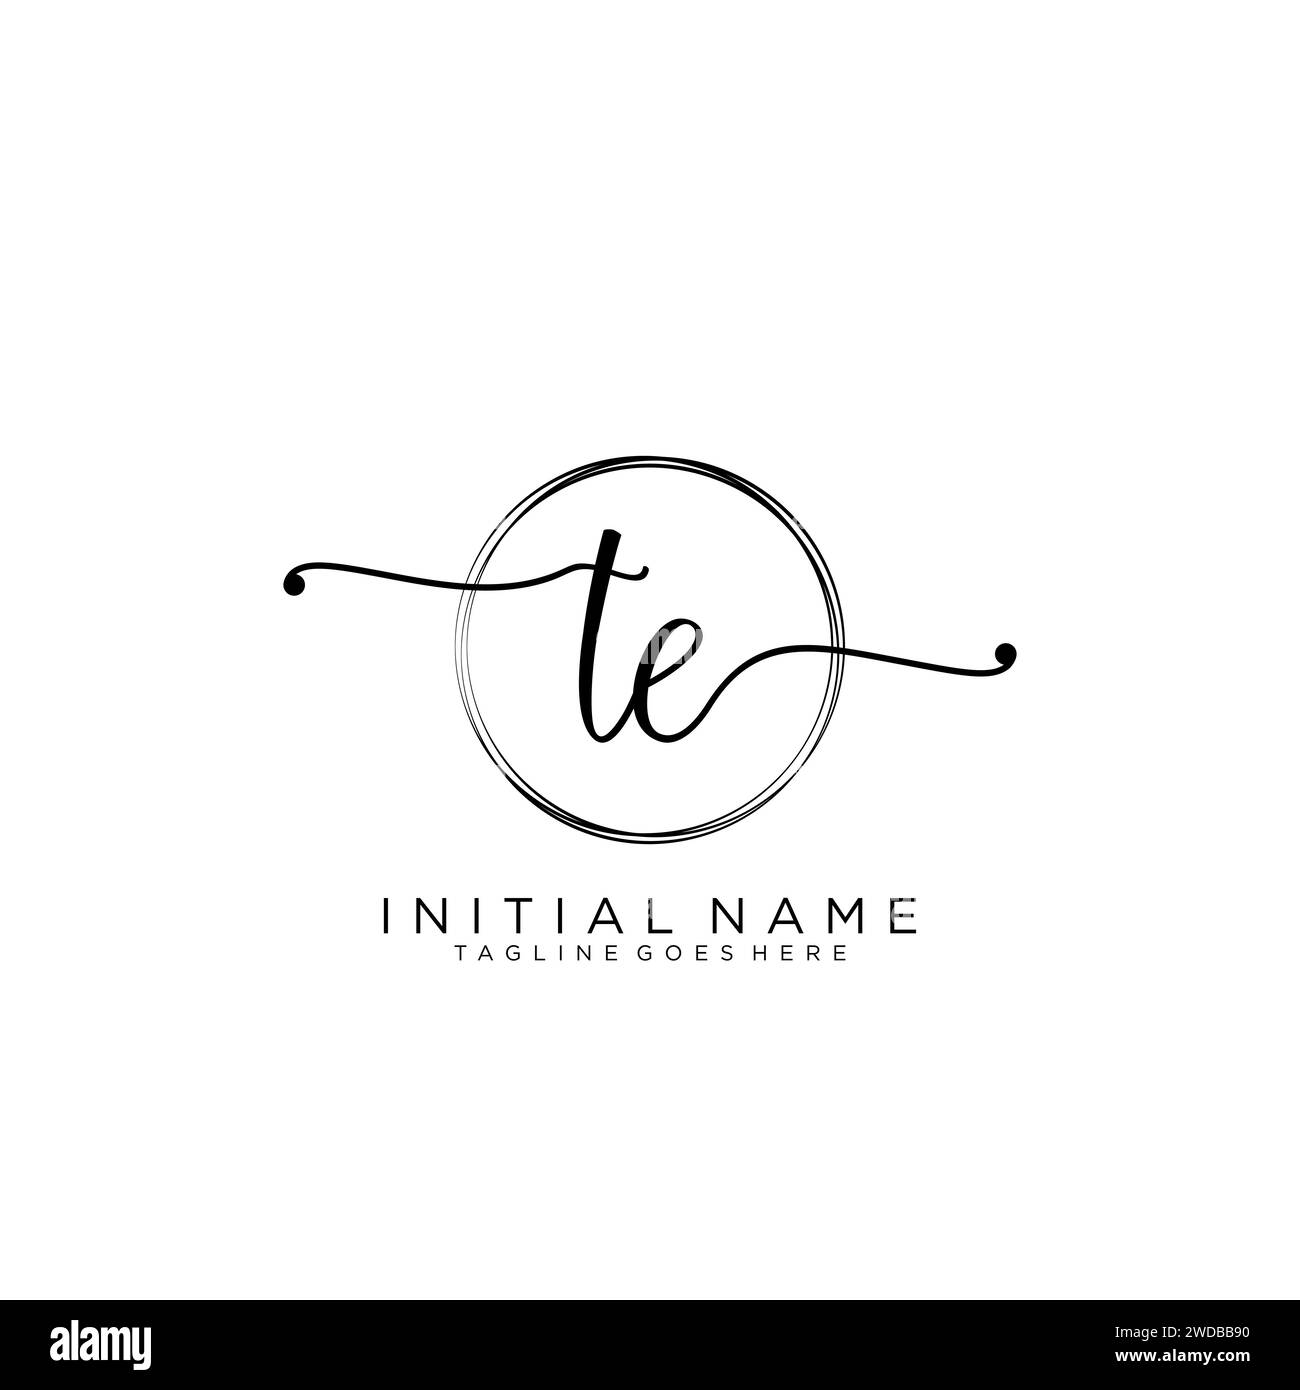 TE Initial handwriting logo with circle Stock Vector